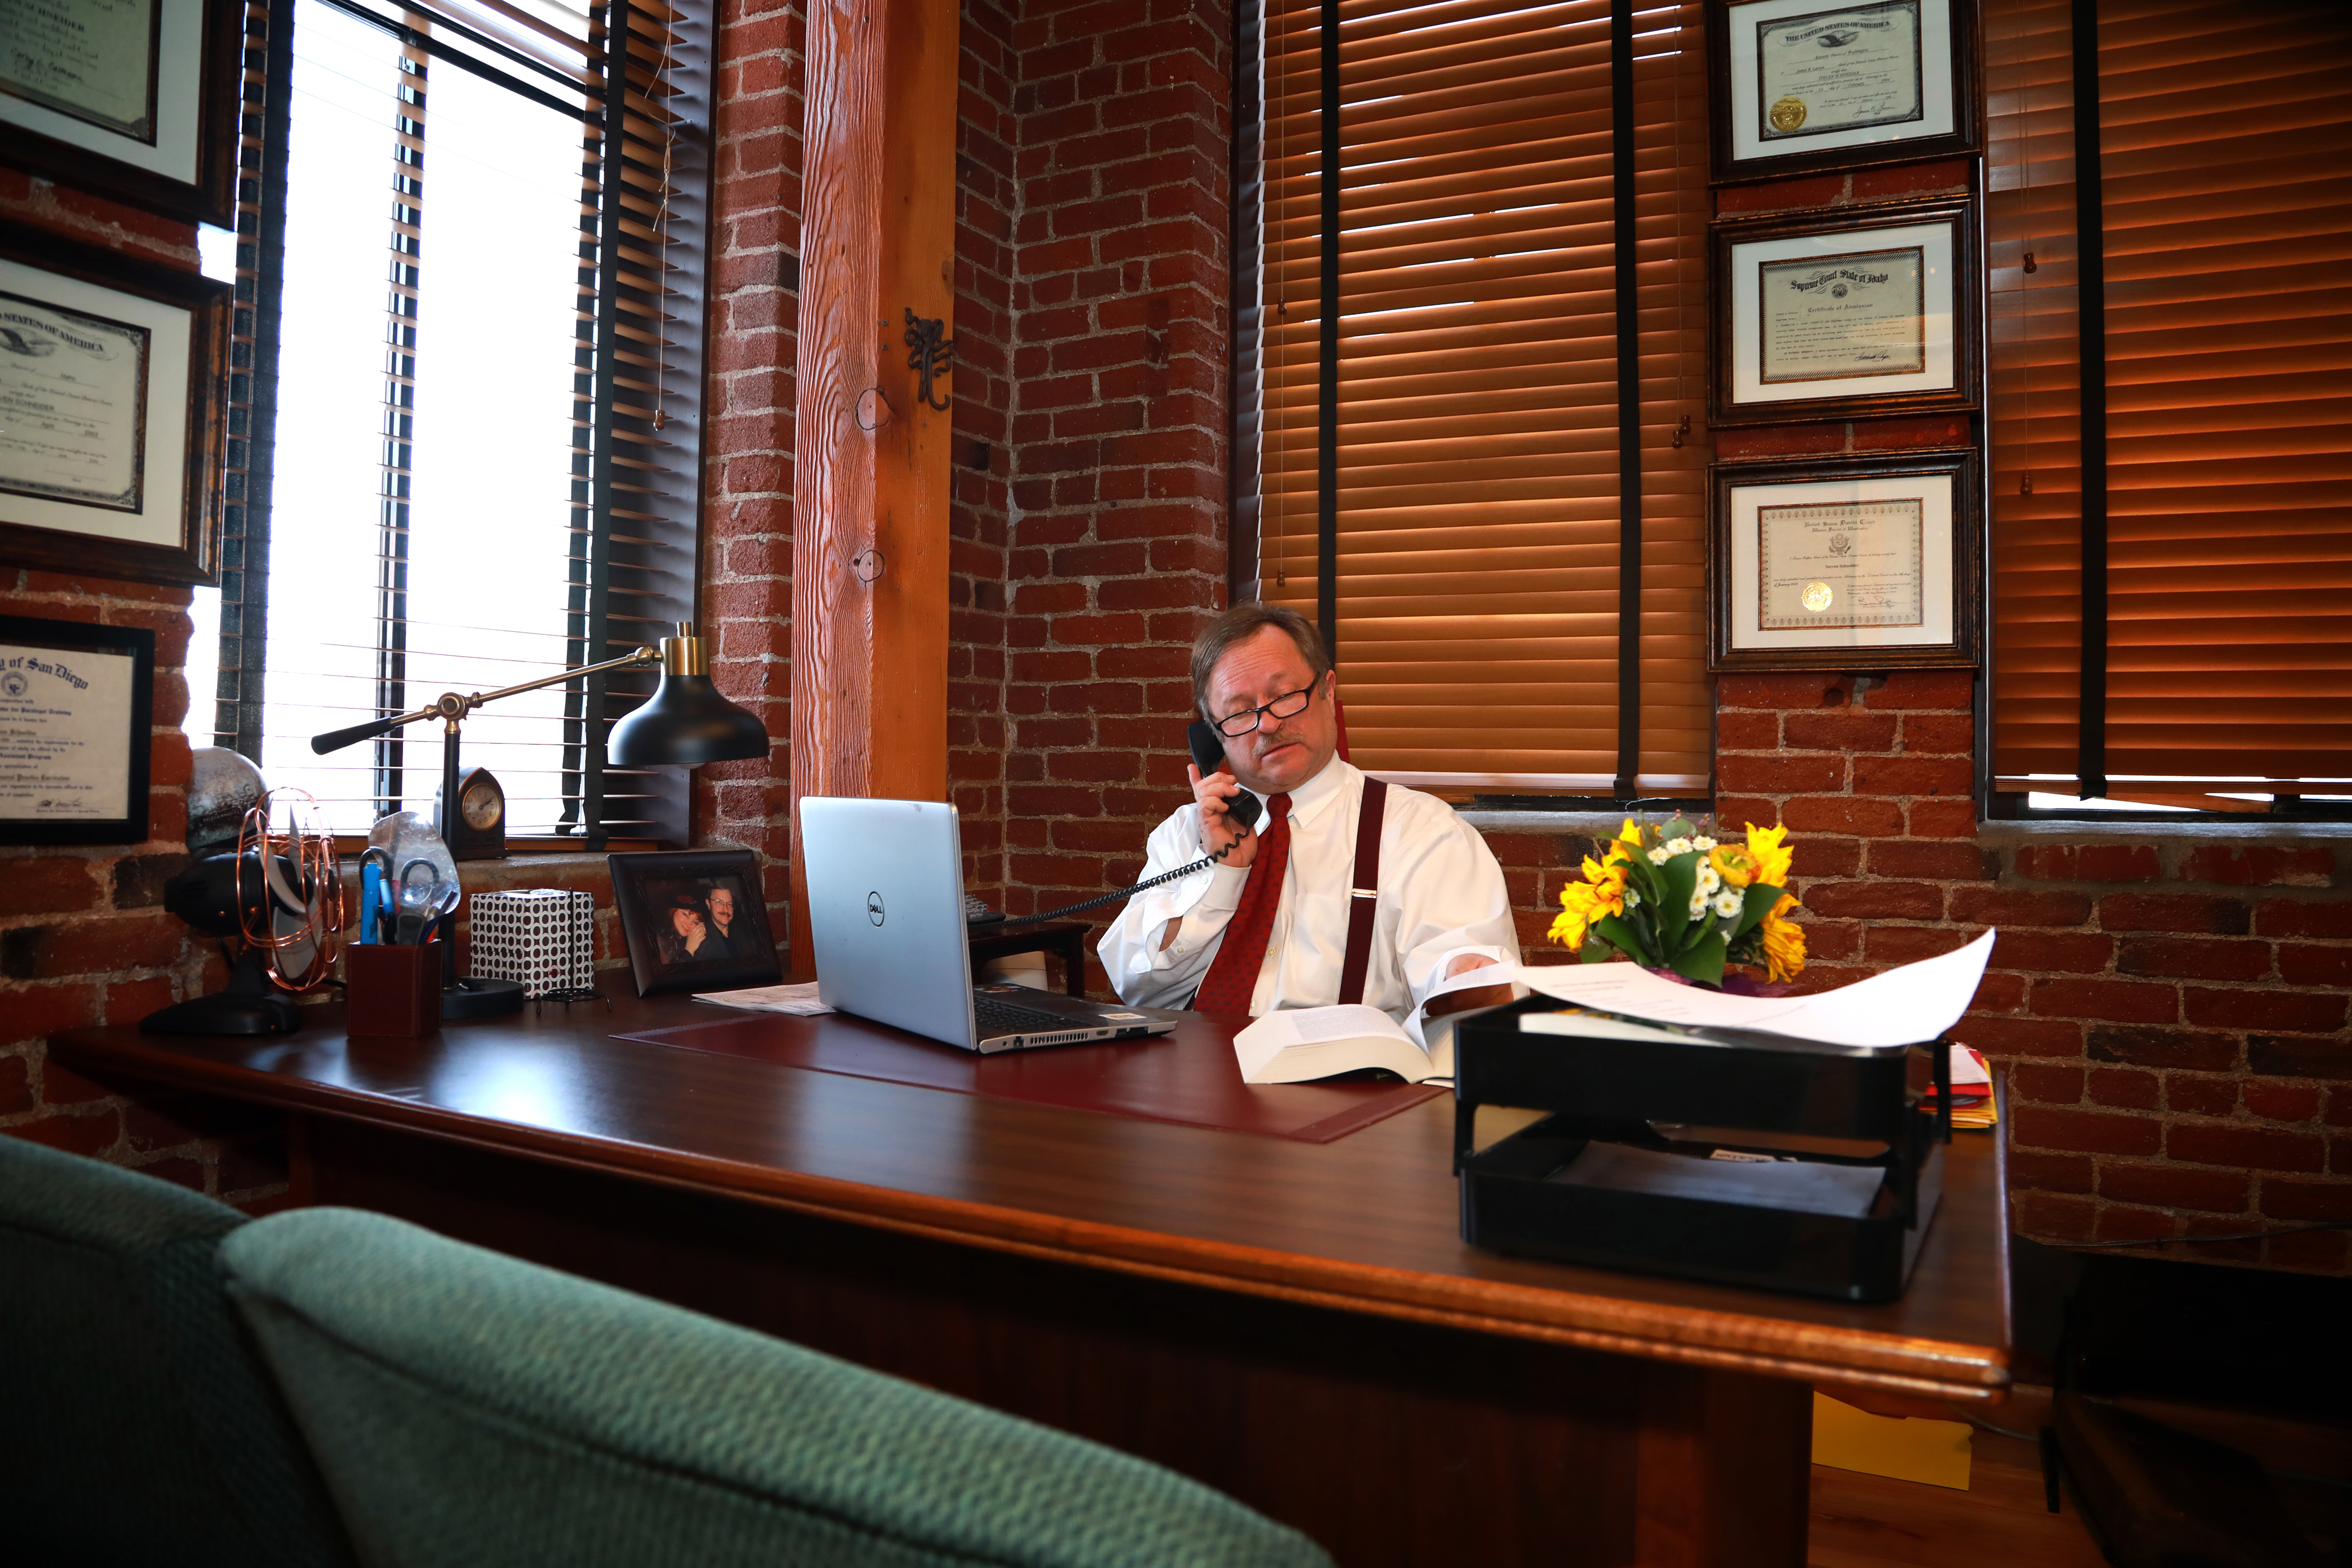 Steven Schneider, Attorney at Law, on phone at desk